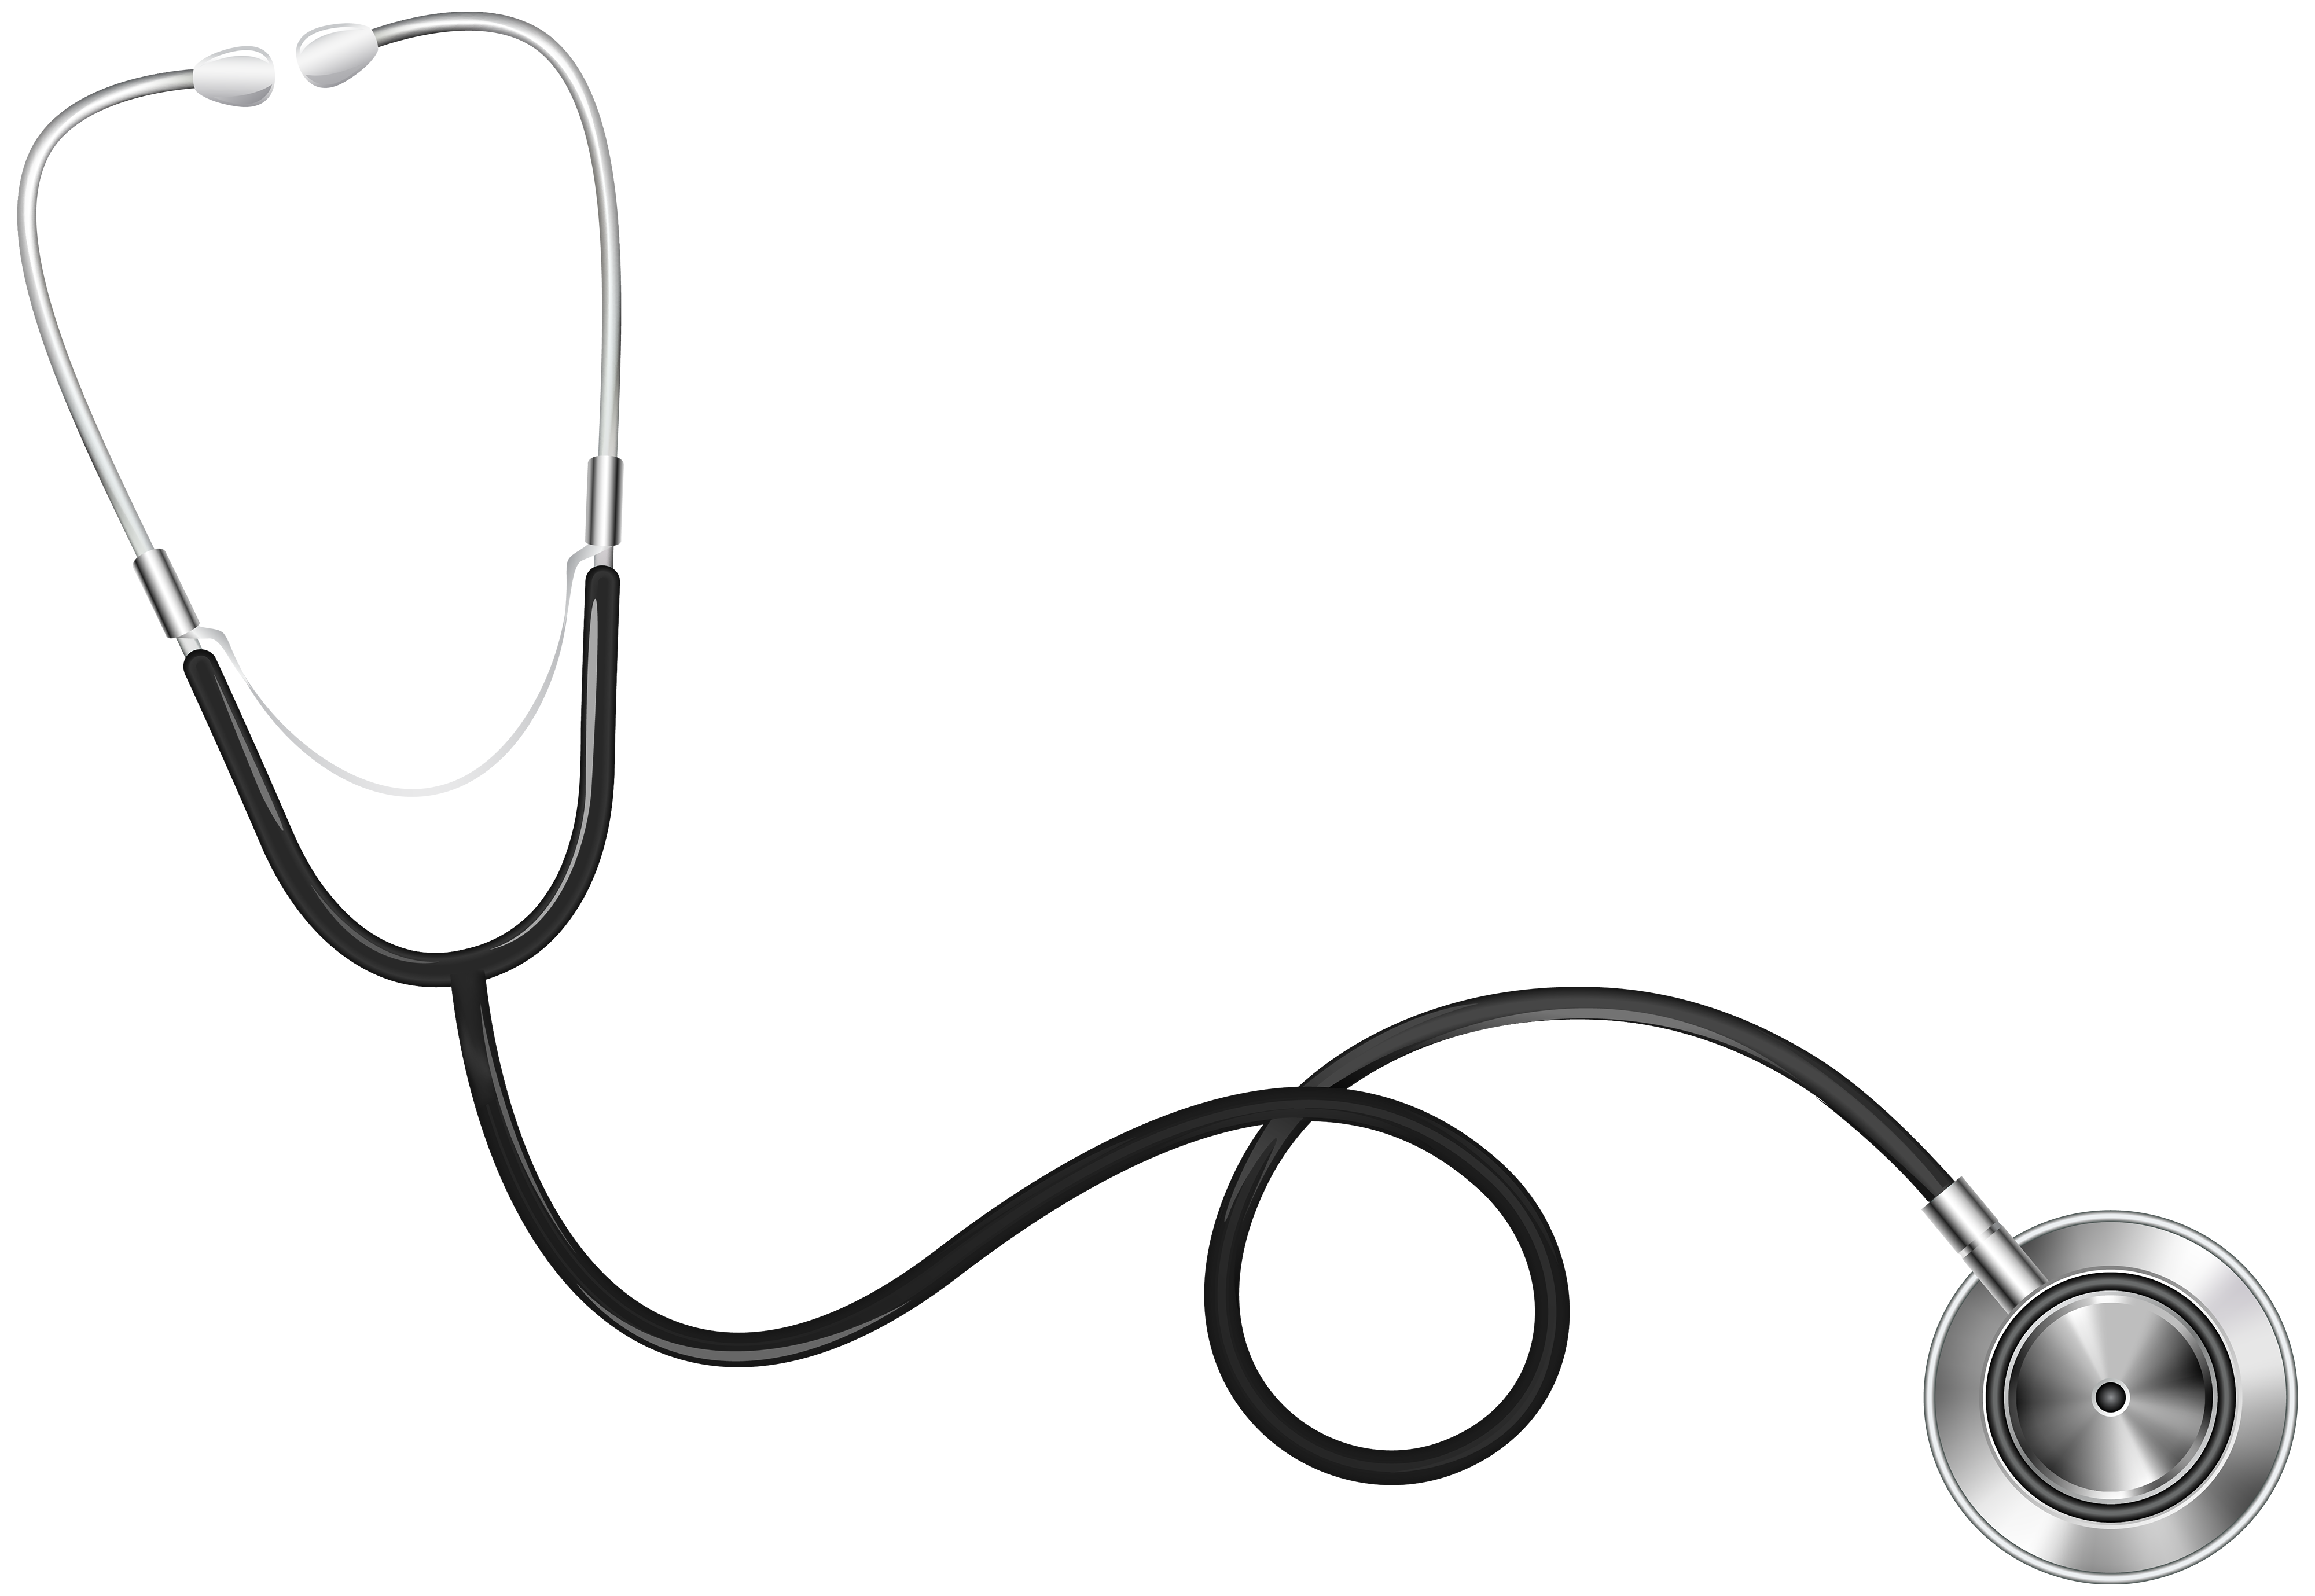 Stethoscope clipart web